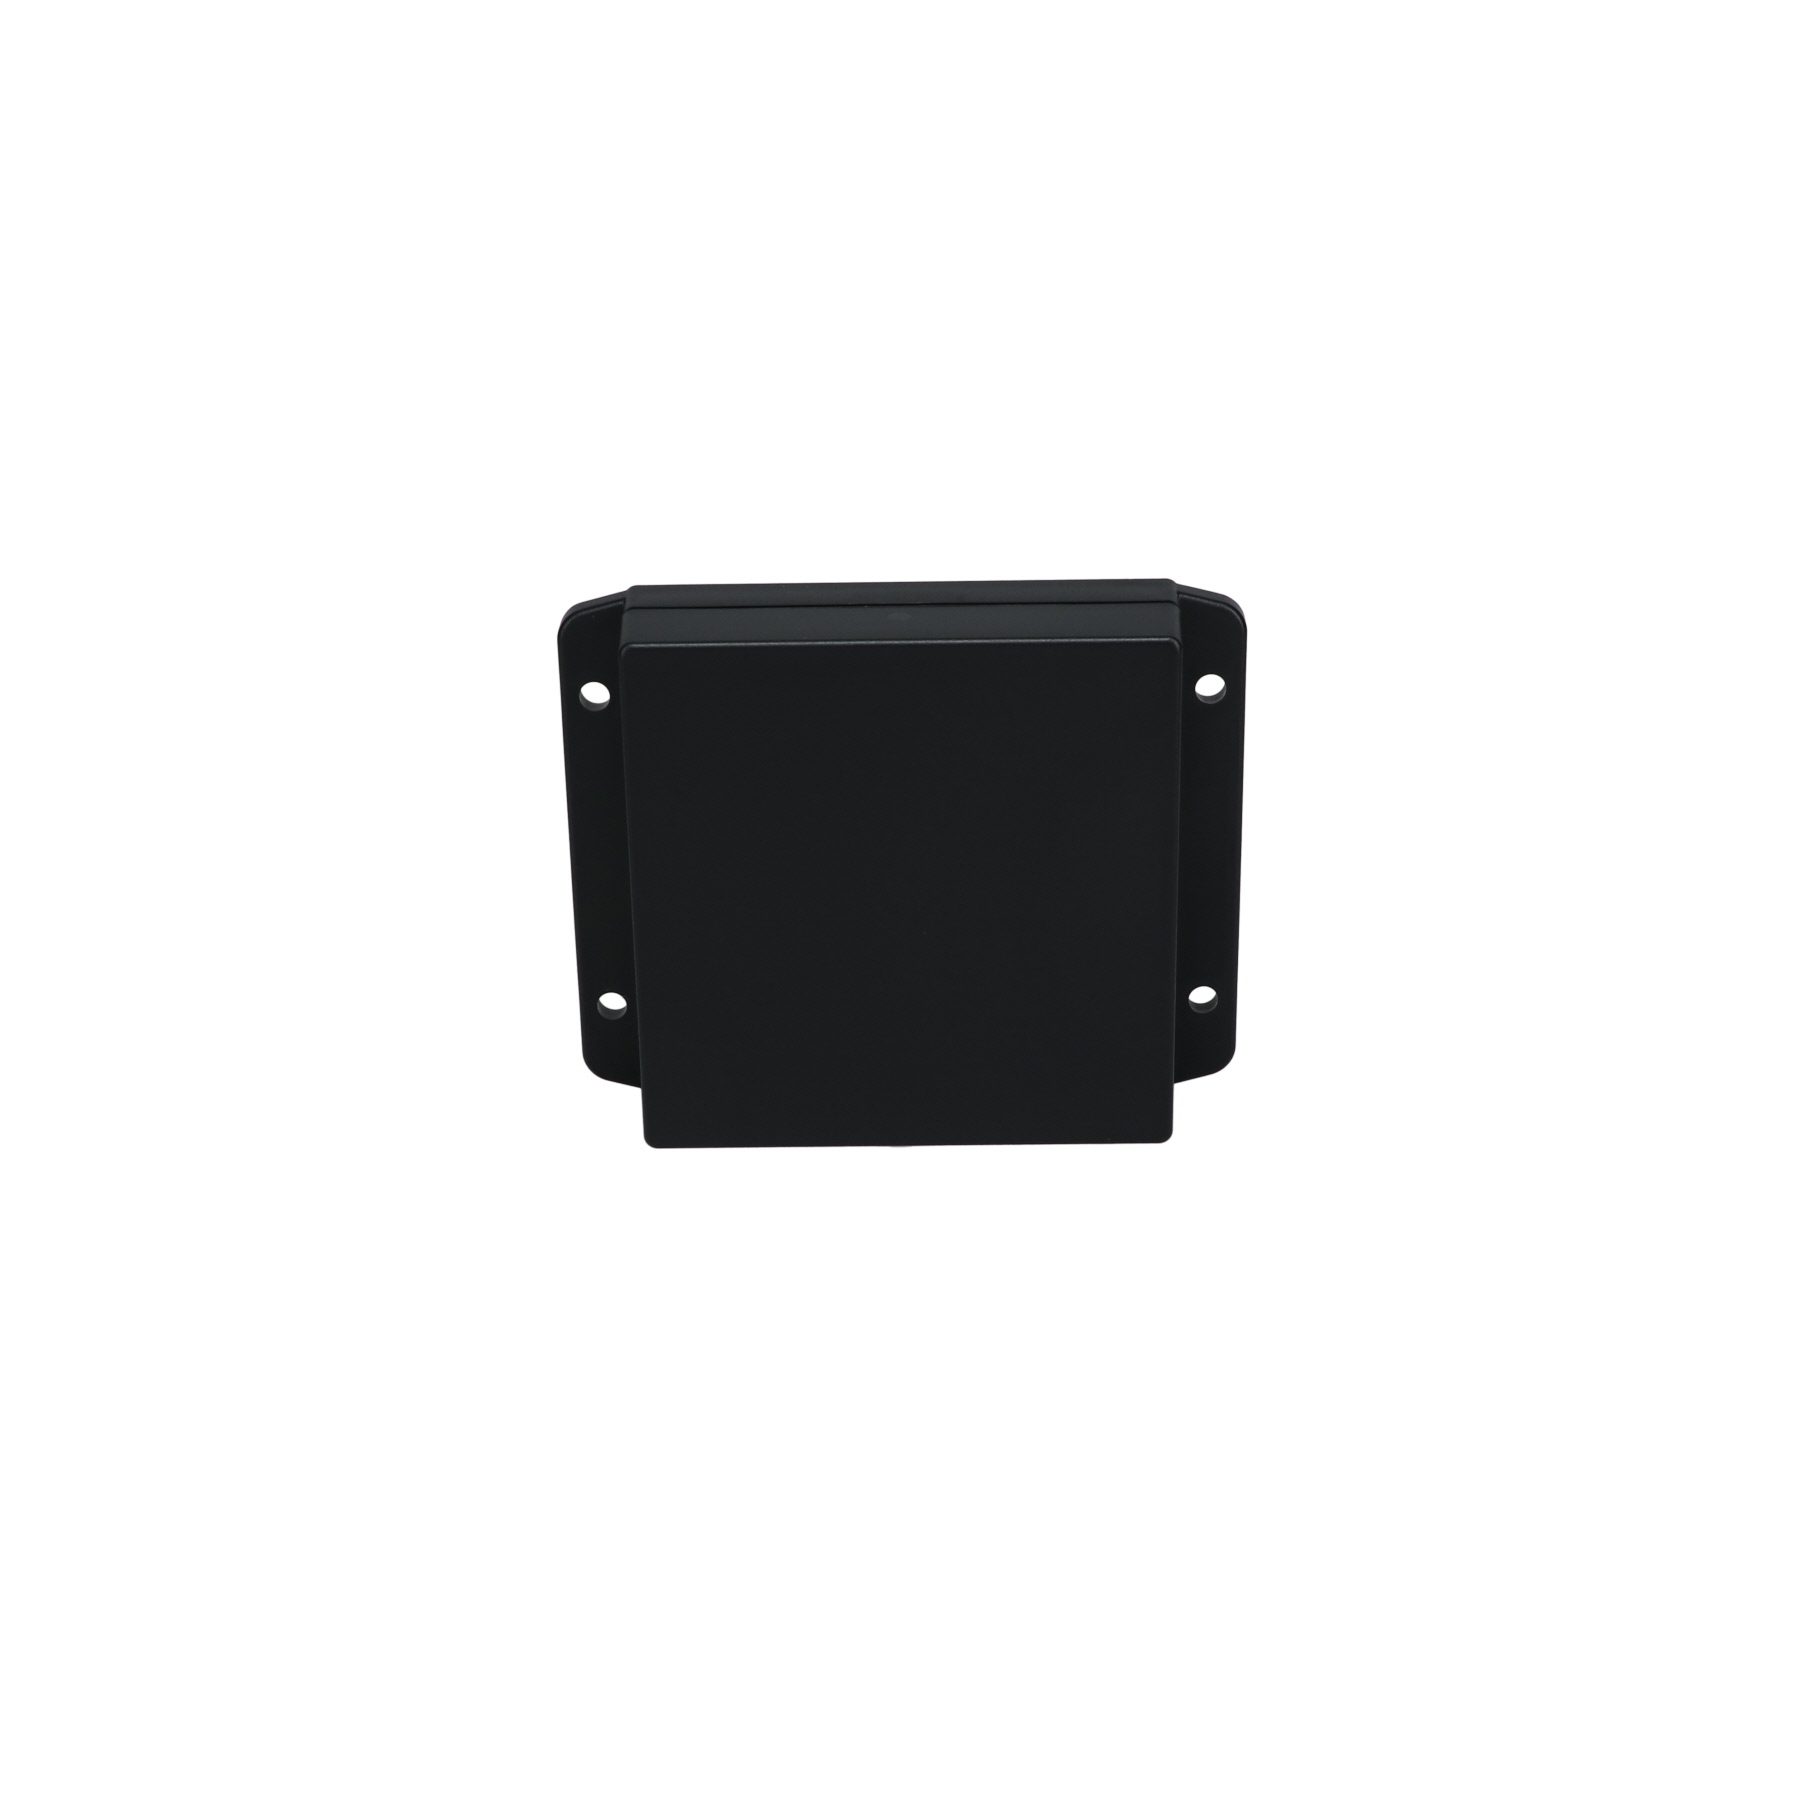 Snap Utility Box Black CU-18430-B